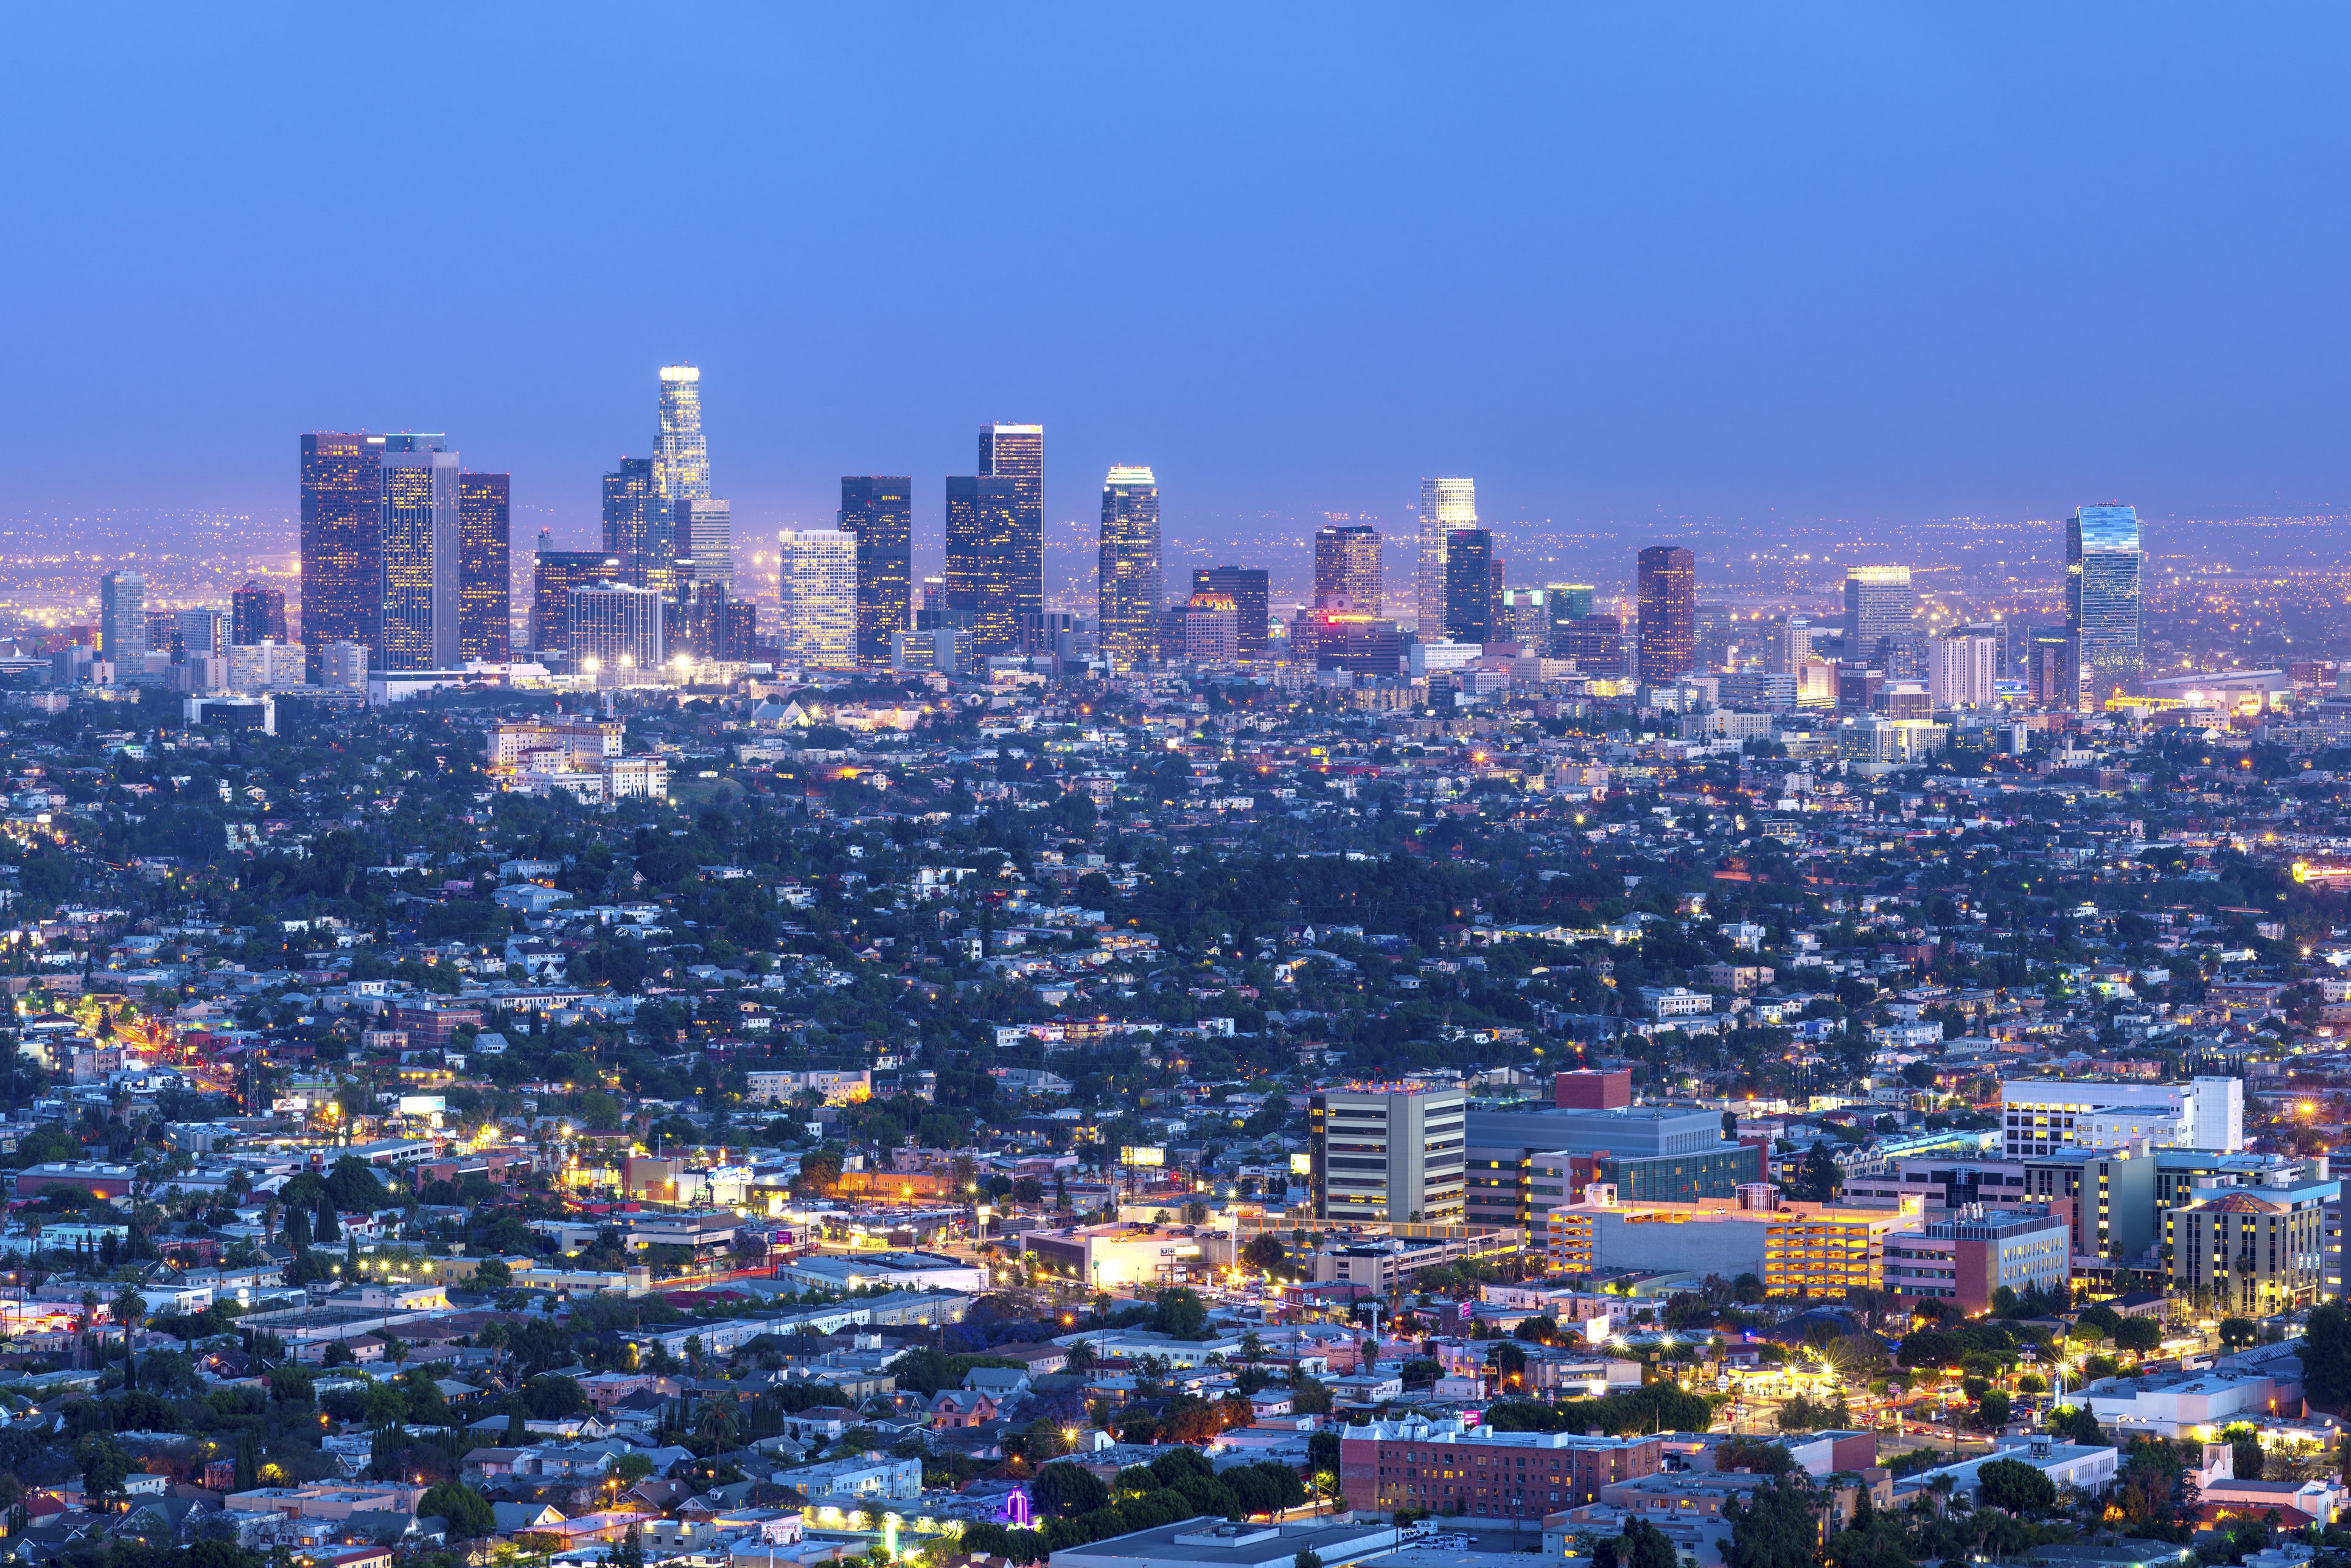 Los Angeles, California Skyline Photo Gallery